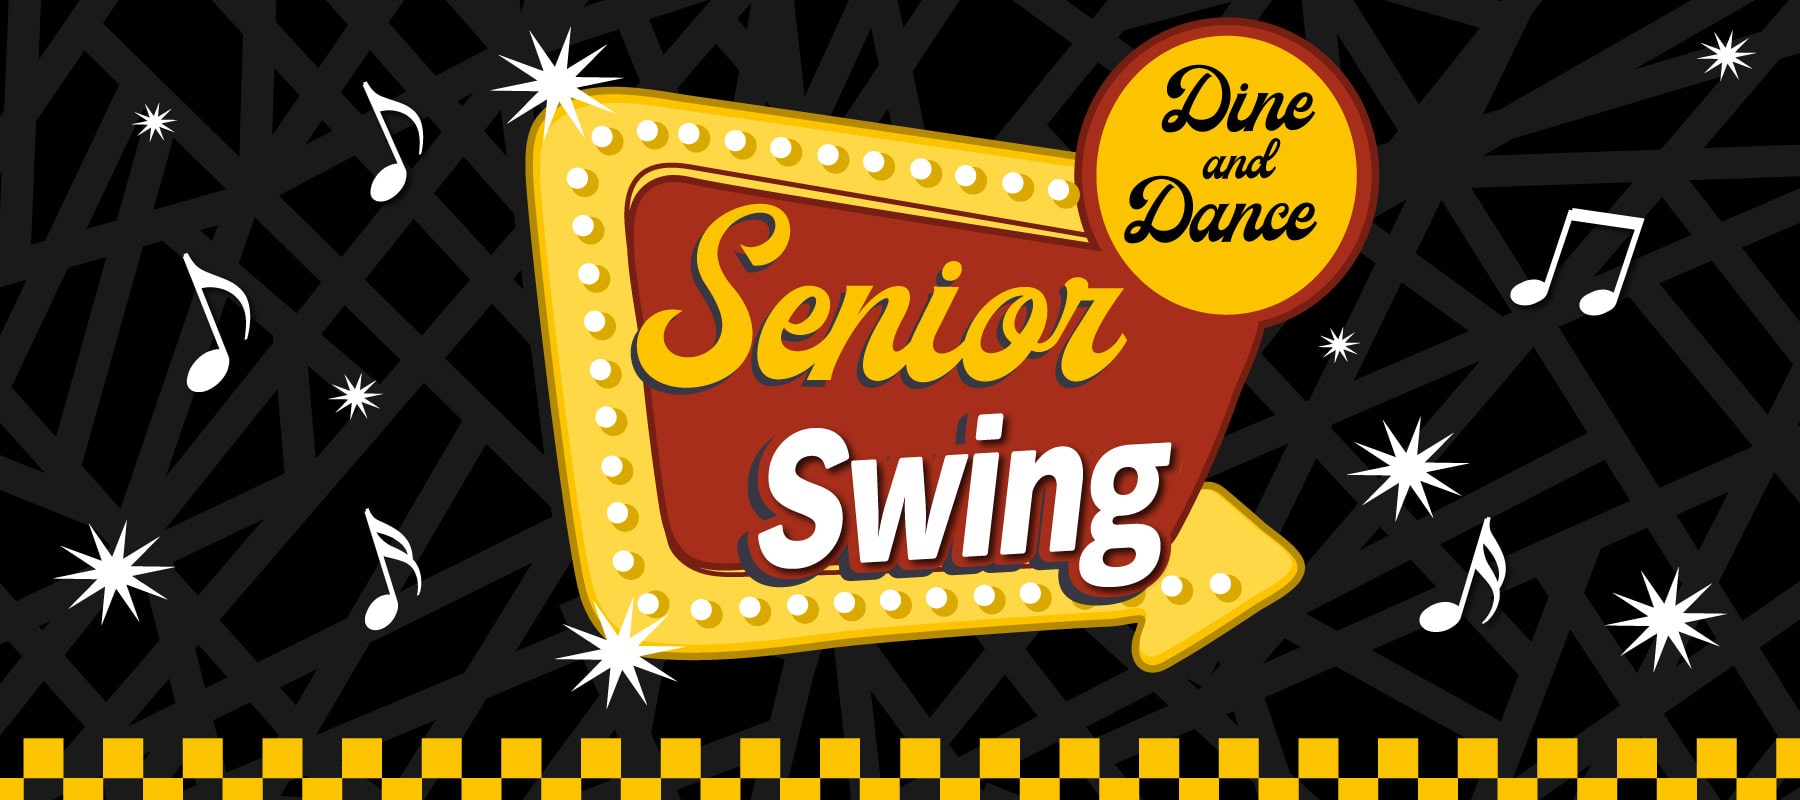 senior swing dine and dance promotion